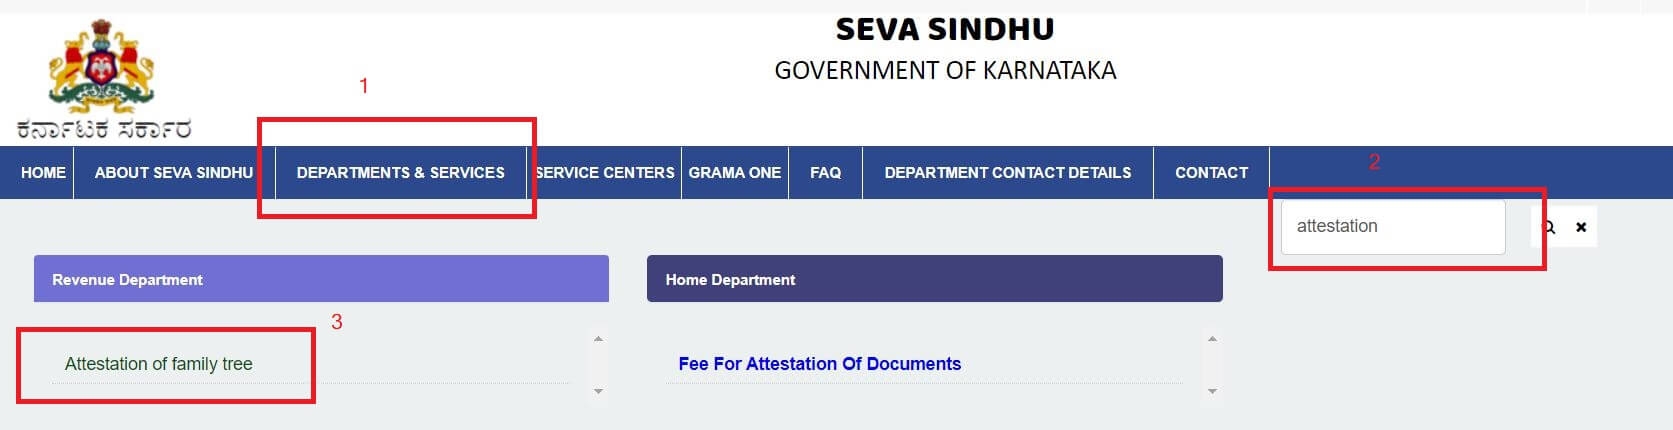 Seva Sindhu Family Tree Certificate